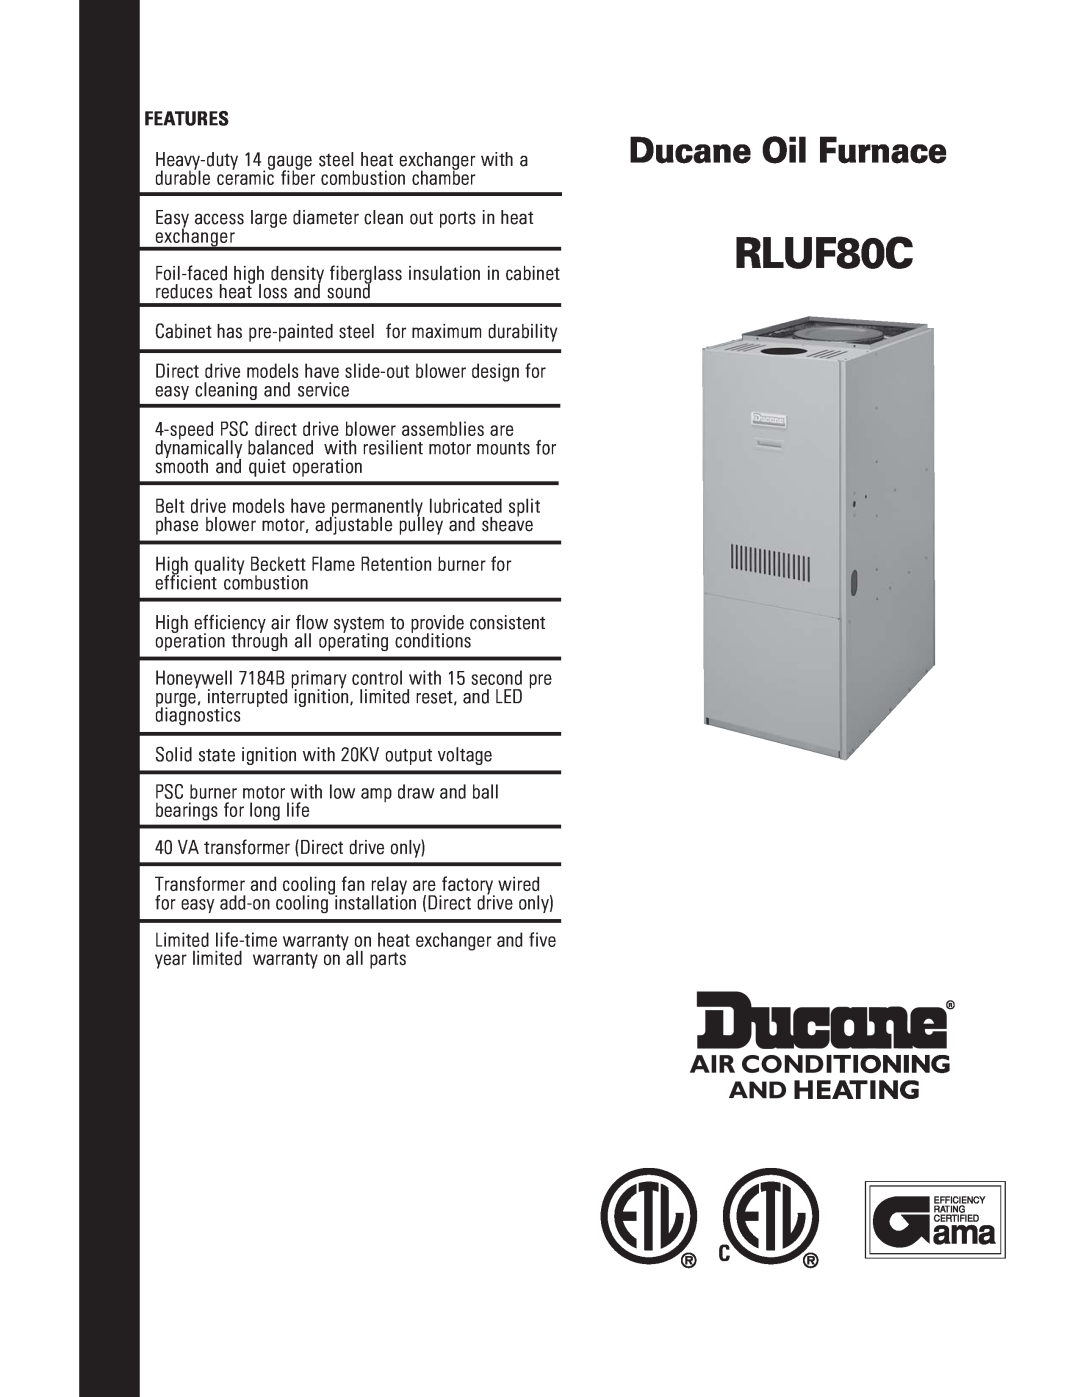 Ducane (HVAC) RLUF80C warranty Ducane Oil Furnace, Features 